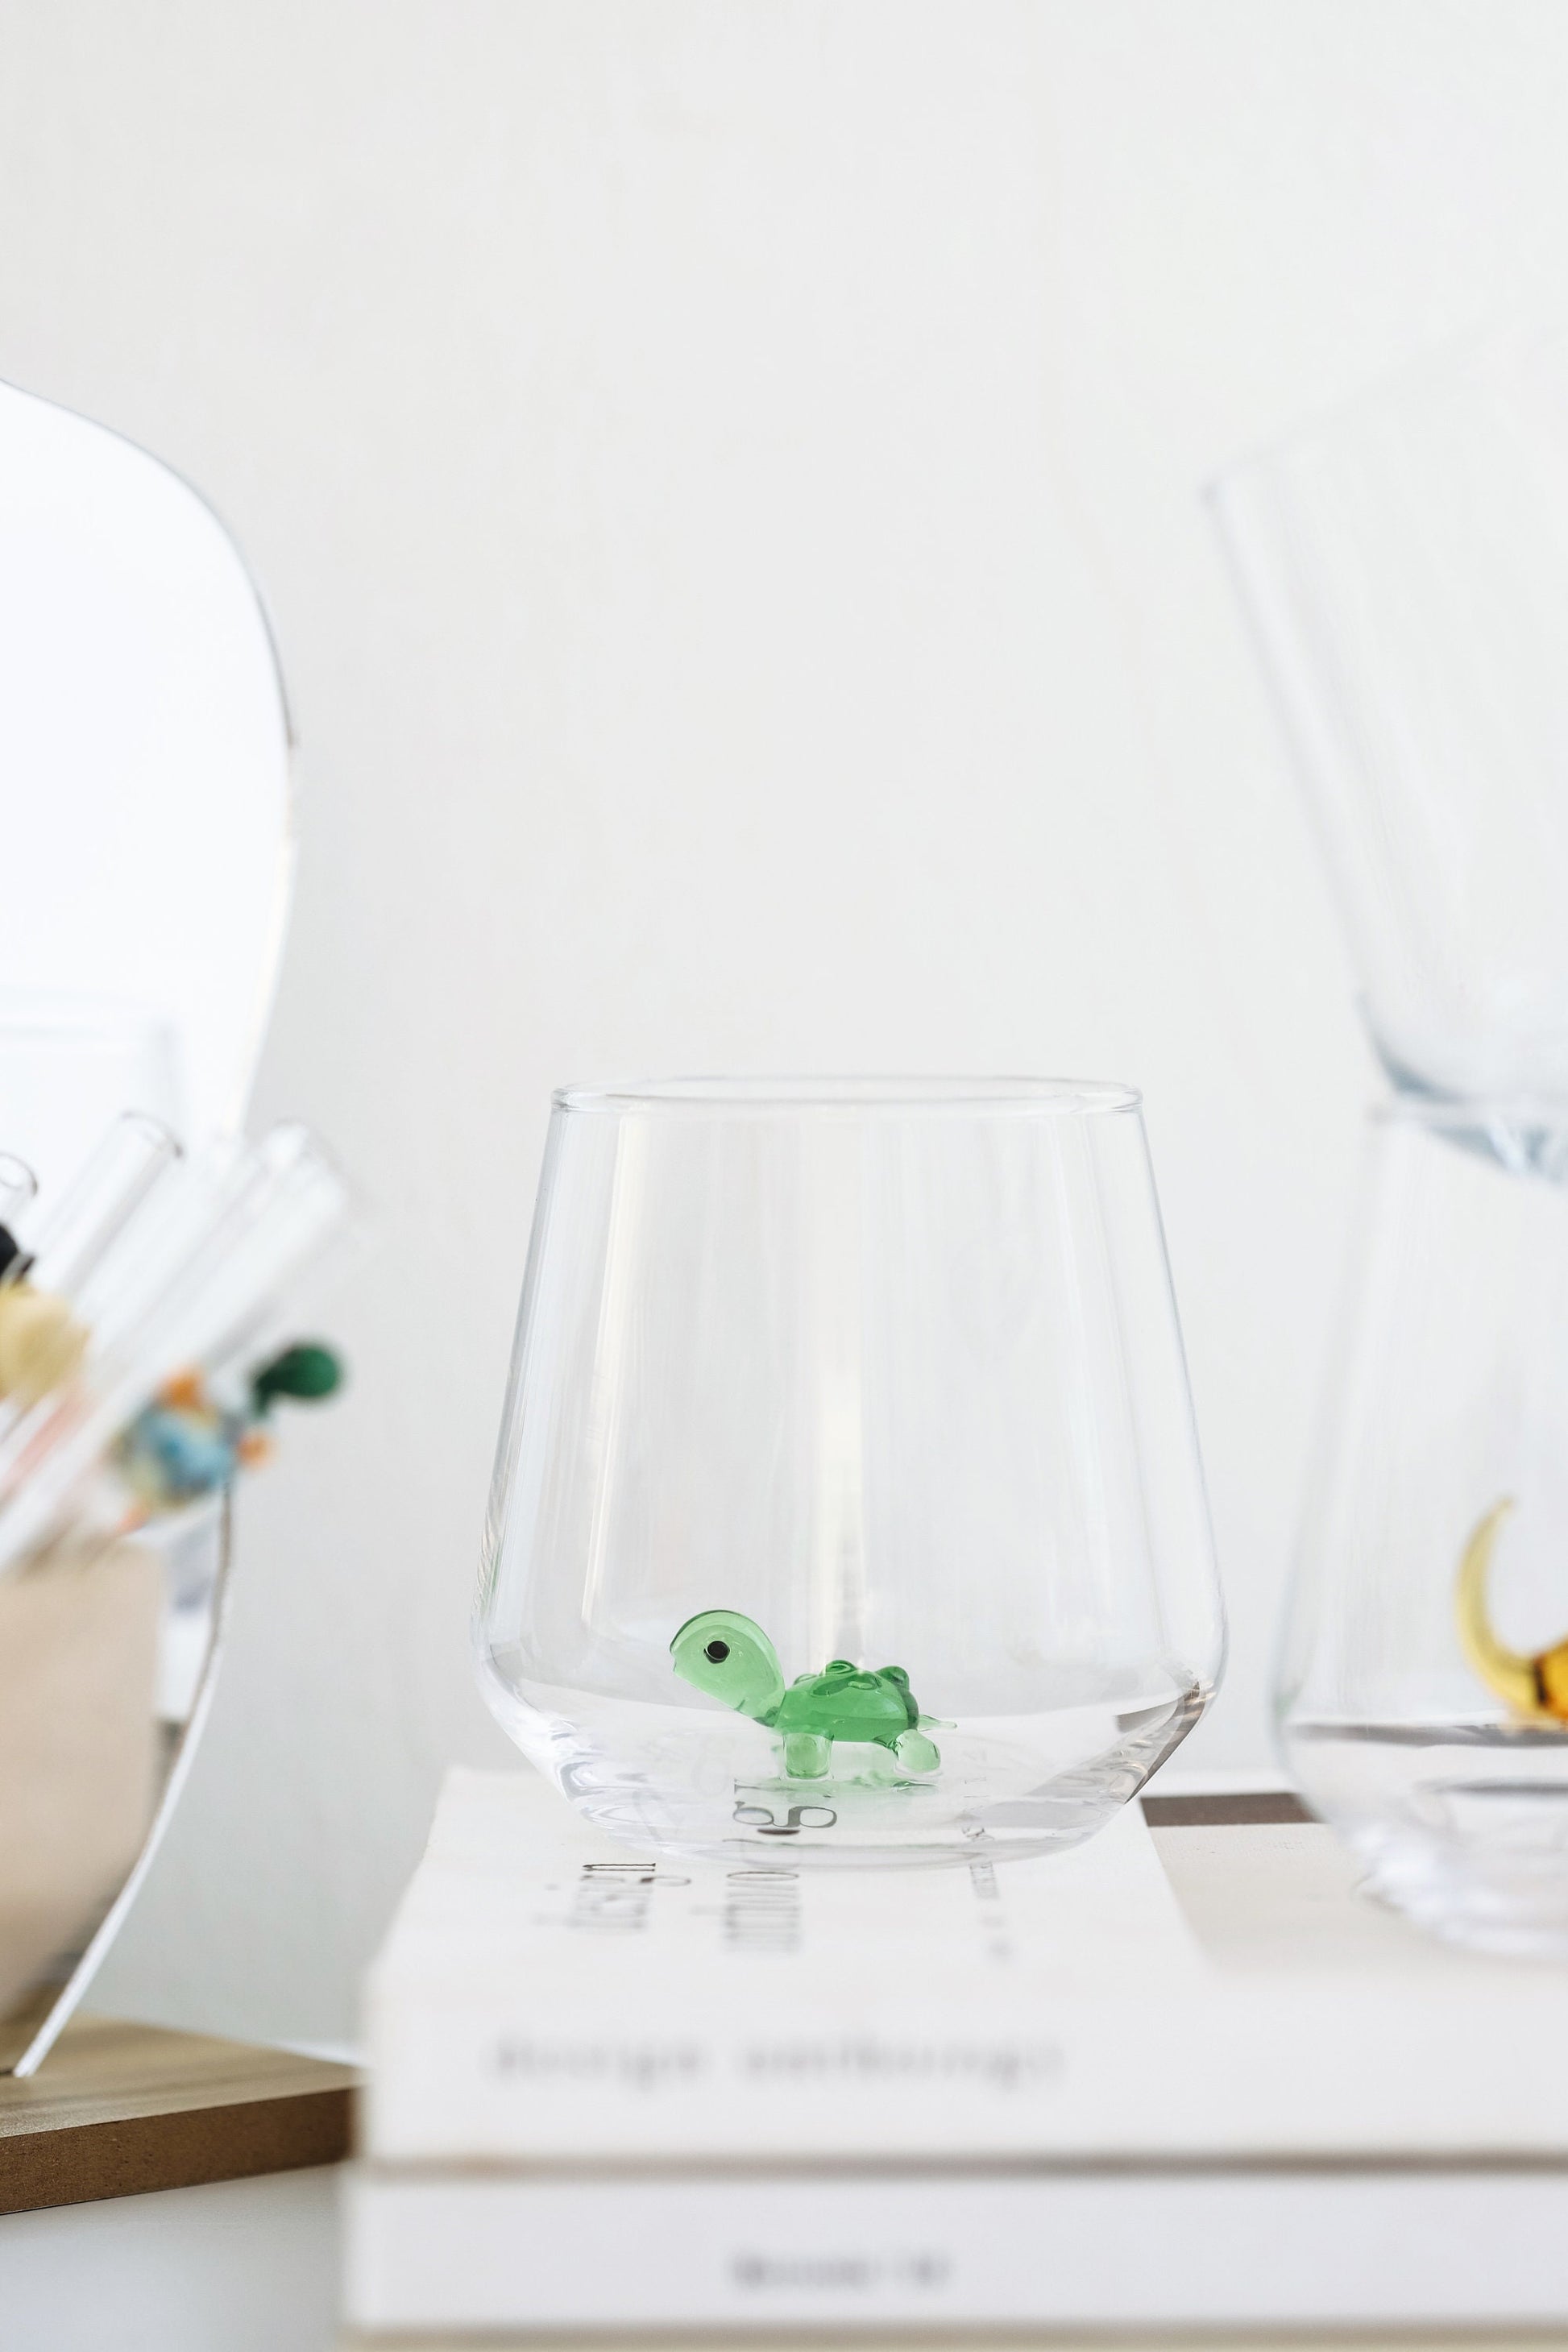 Handblown Figures Inside Drinking Glass Cup, Stemless Glass with Hidden  Animals Inside, Perfect for …See more Handblown Figures Inside Drinking  Glass